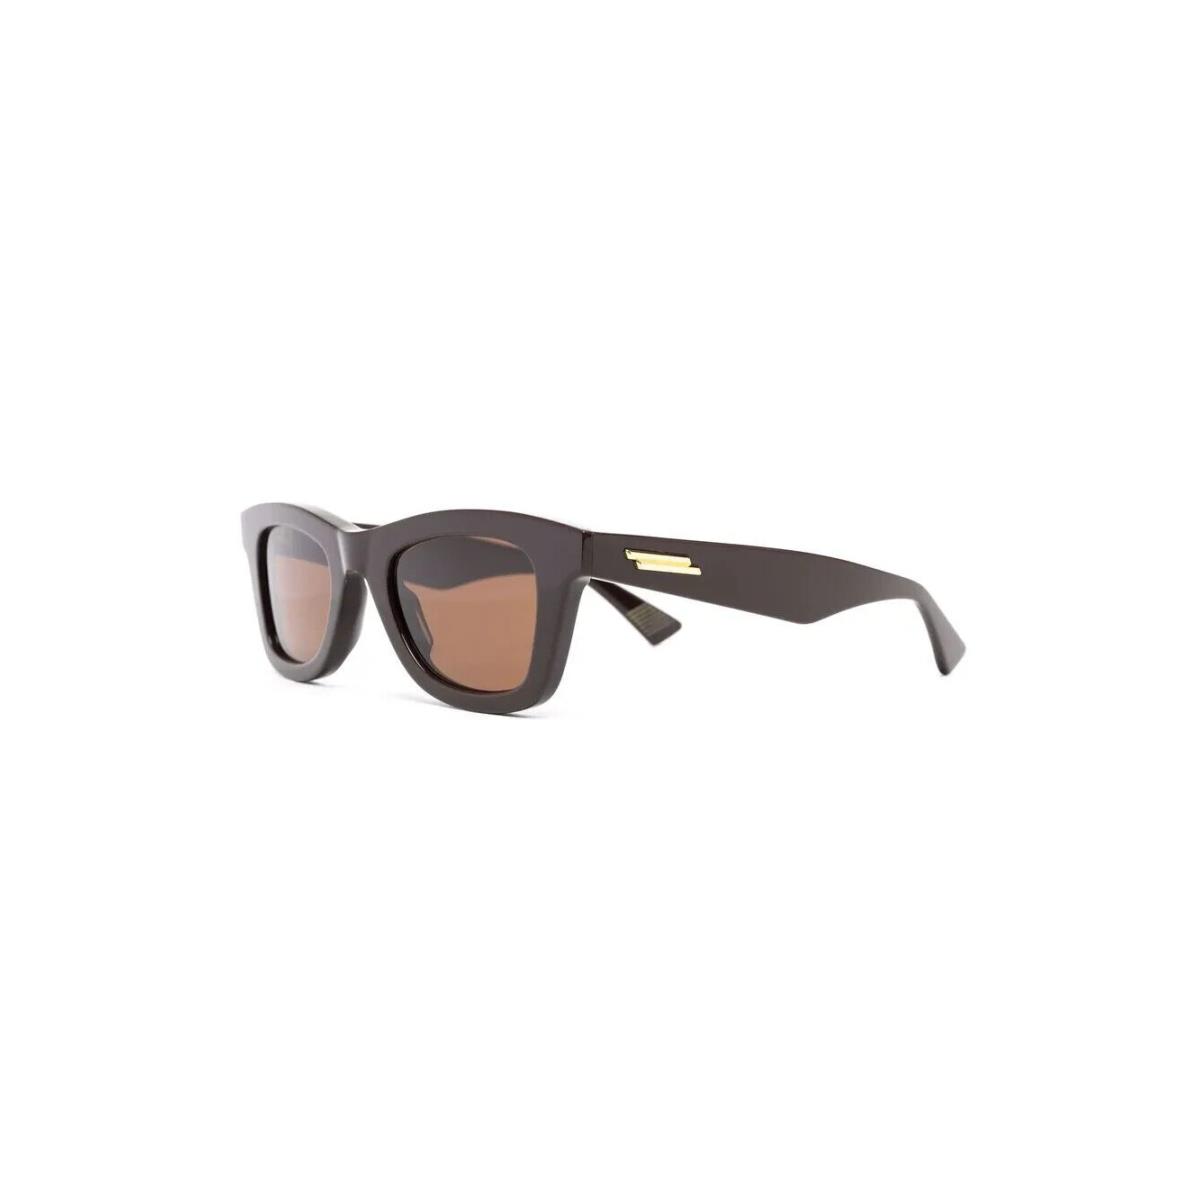 Bottega Veneta sunglasses  - Frame: Brown 0